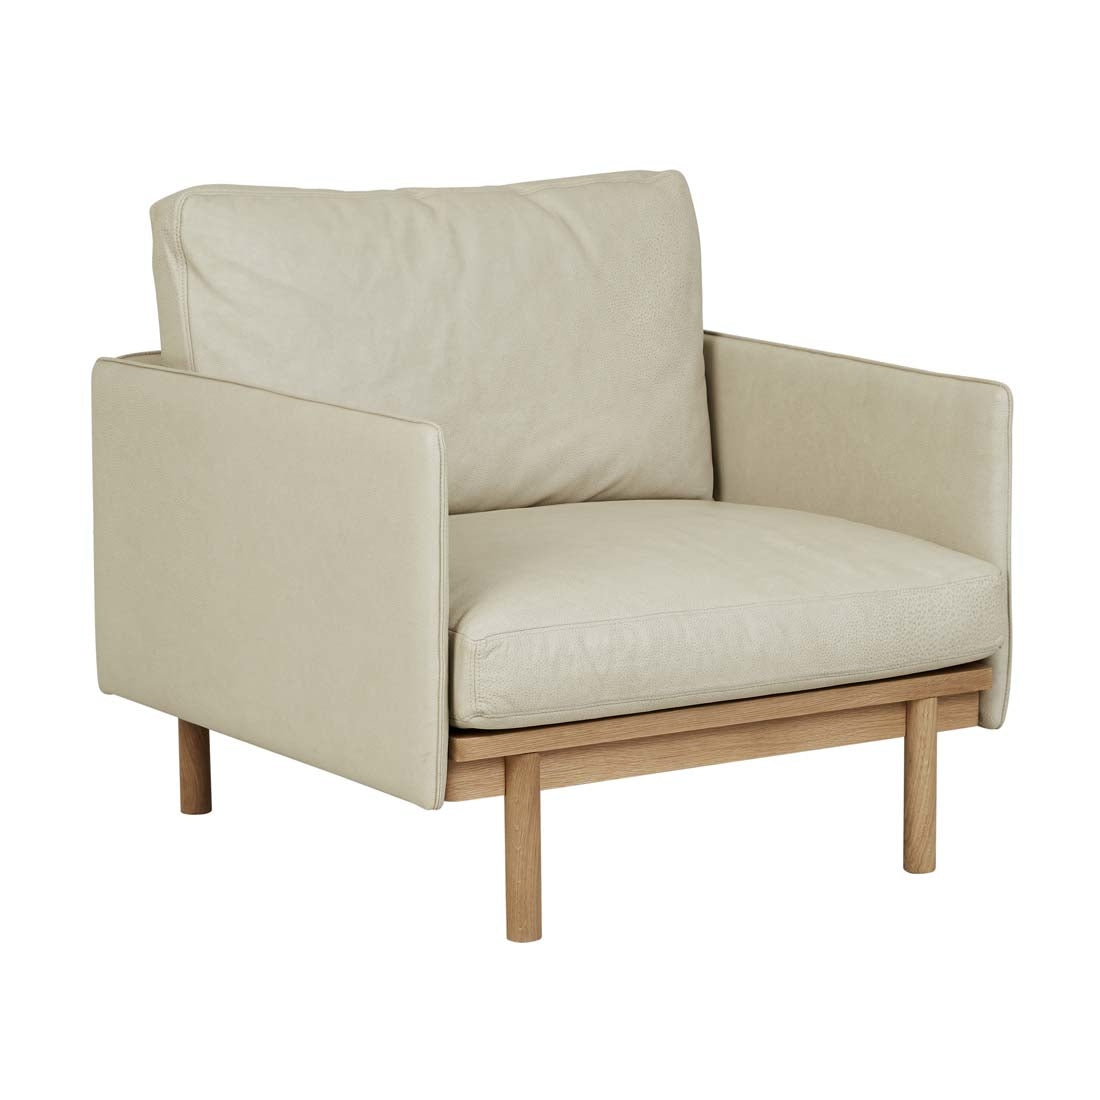 Tolv Pensive Sofa Chair - Coastal Living